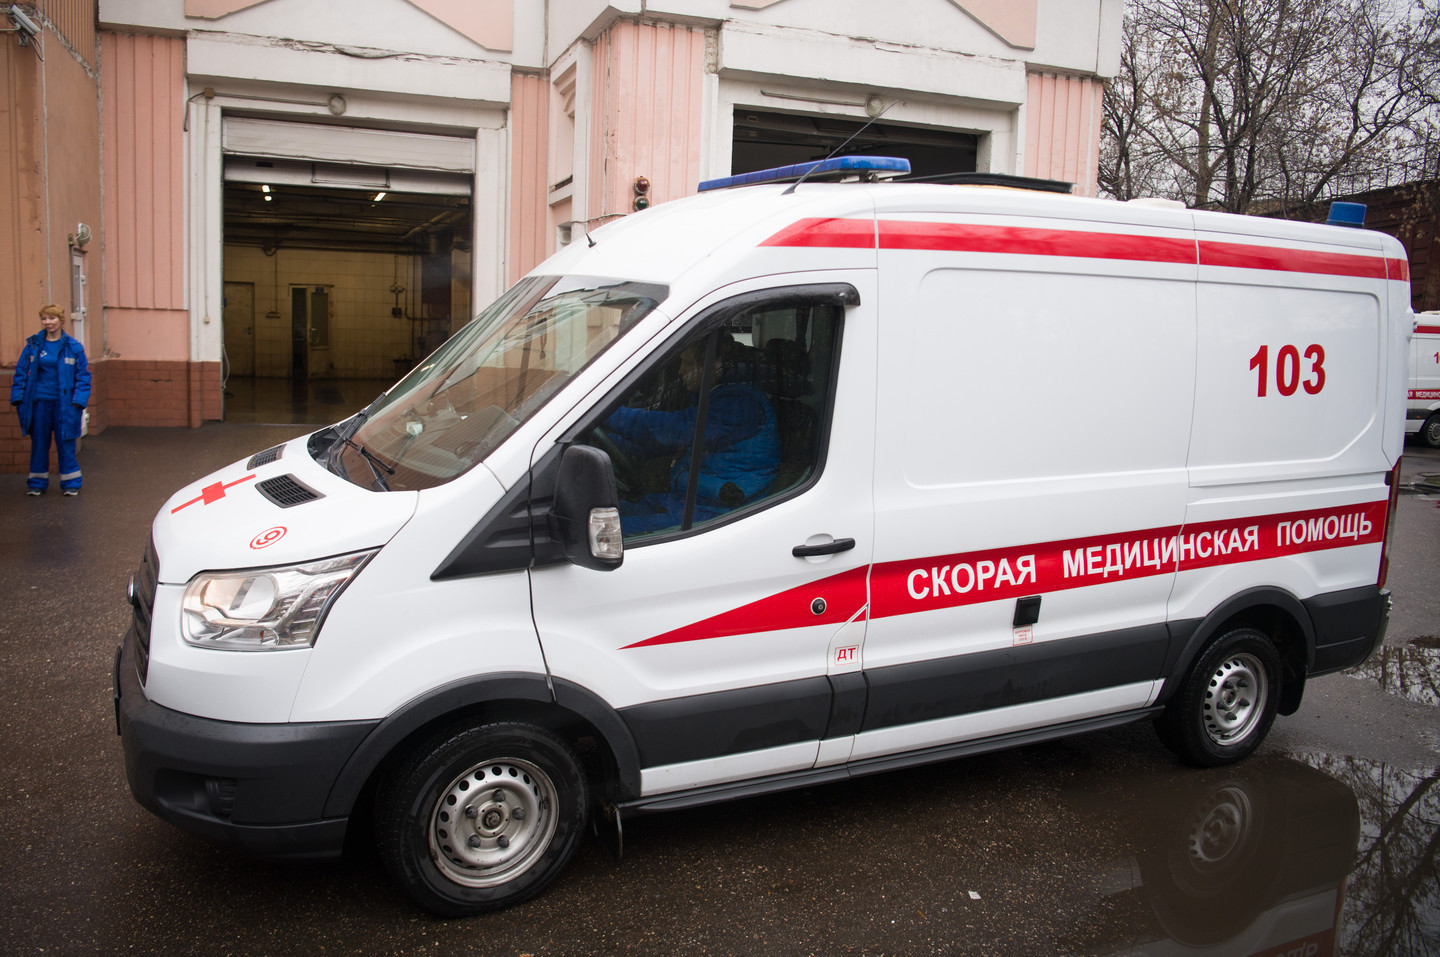 Автомобиль скорой помощи. Фото: © РИА Новости/Евгений Биятов
